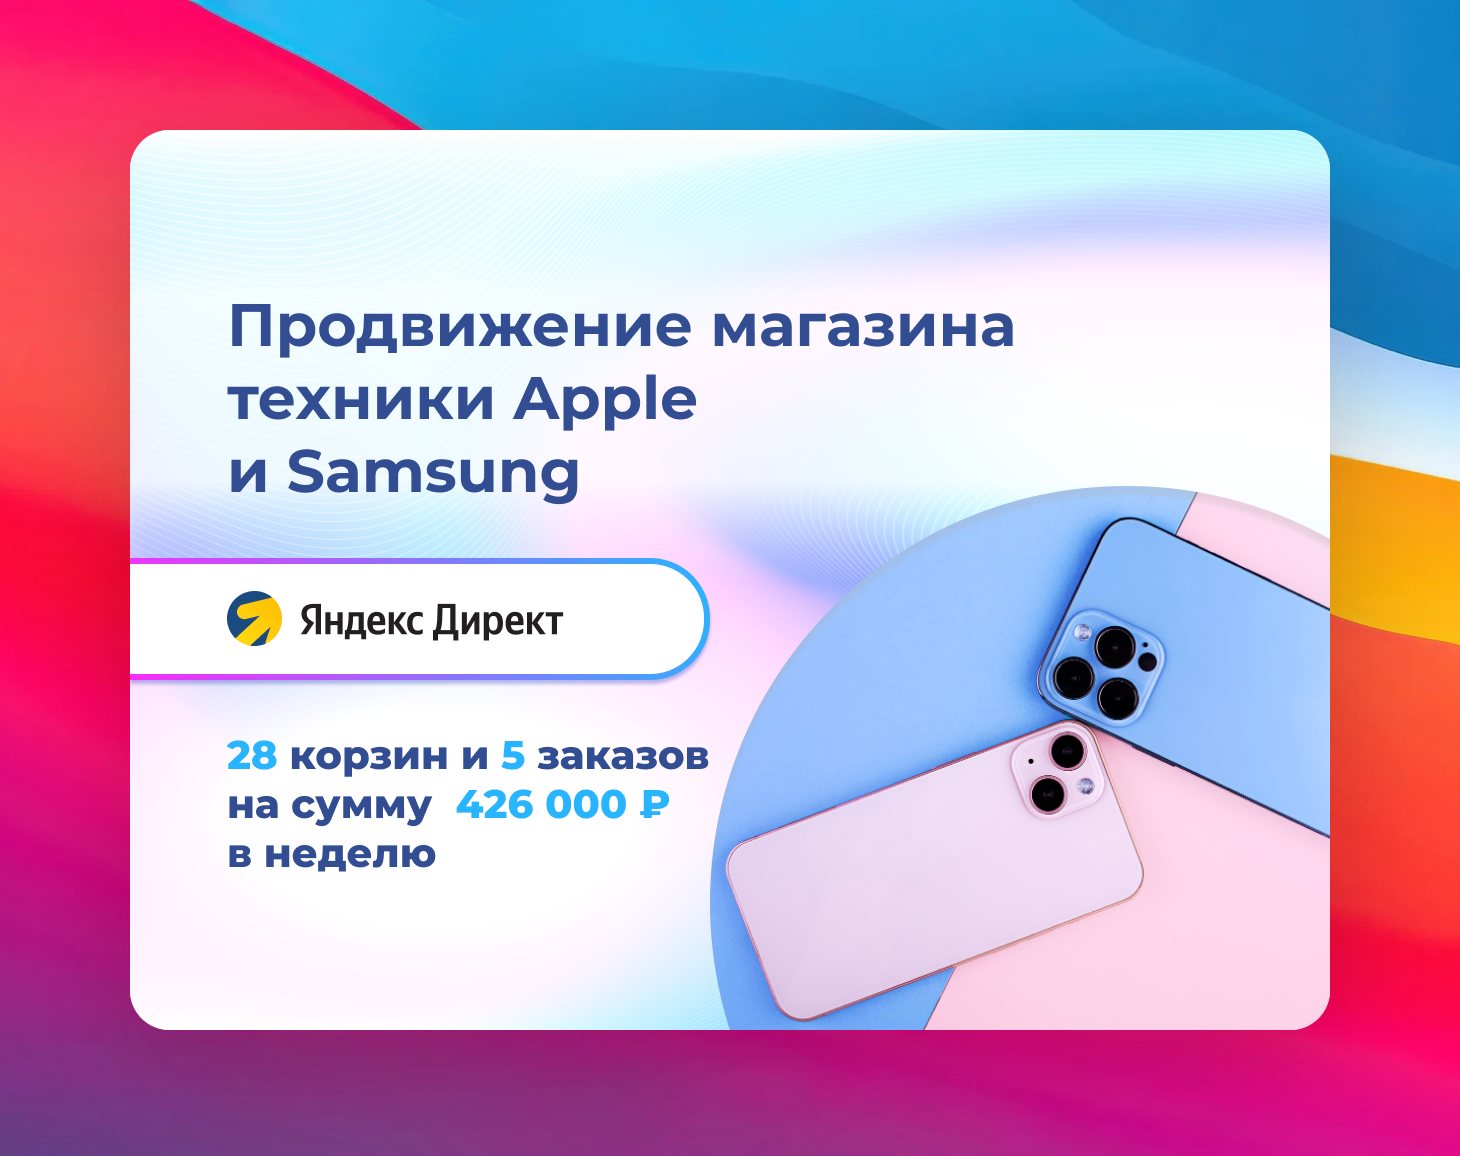 кейс реклама яндекс директ для магазина техники Apple